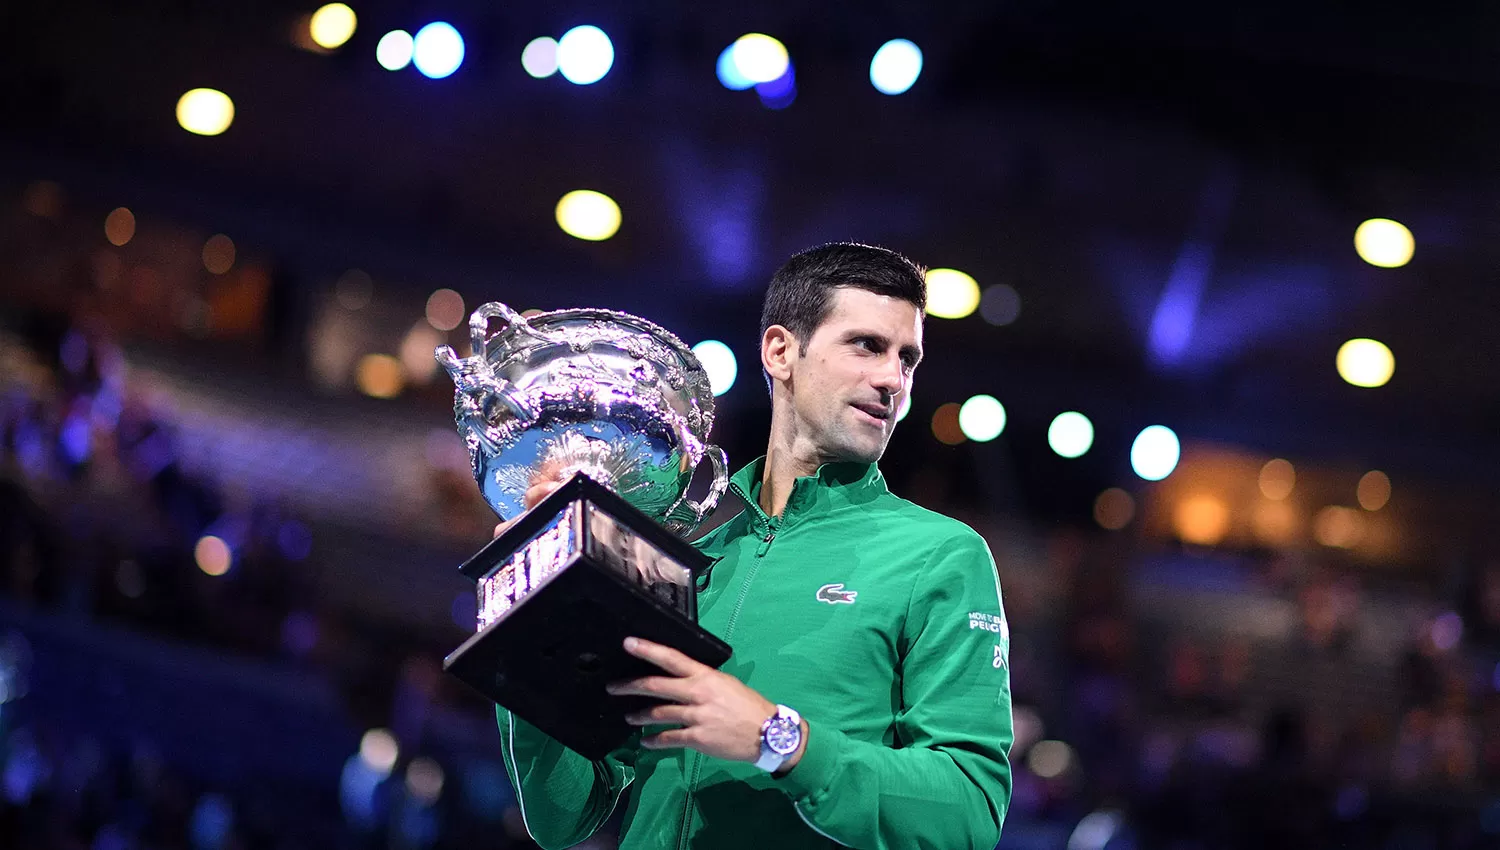 Novaj Djokovic le ganó la final del año pasado en Wimbledon a Roger Federer. (ARCHIVO)